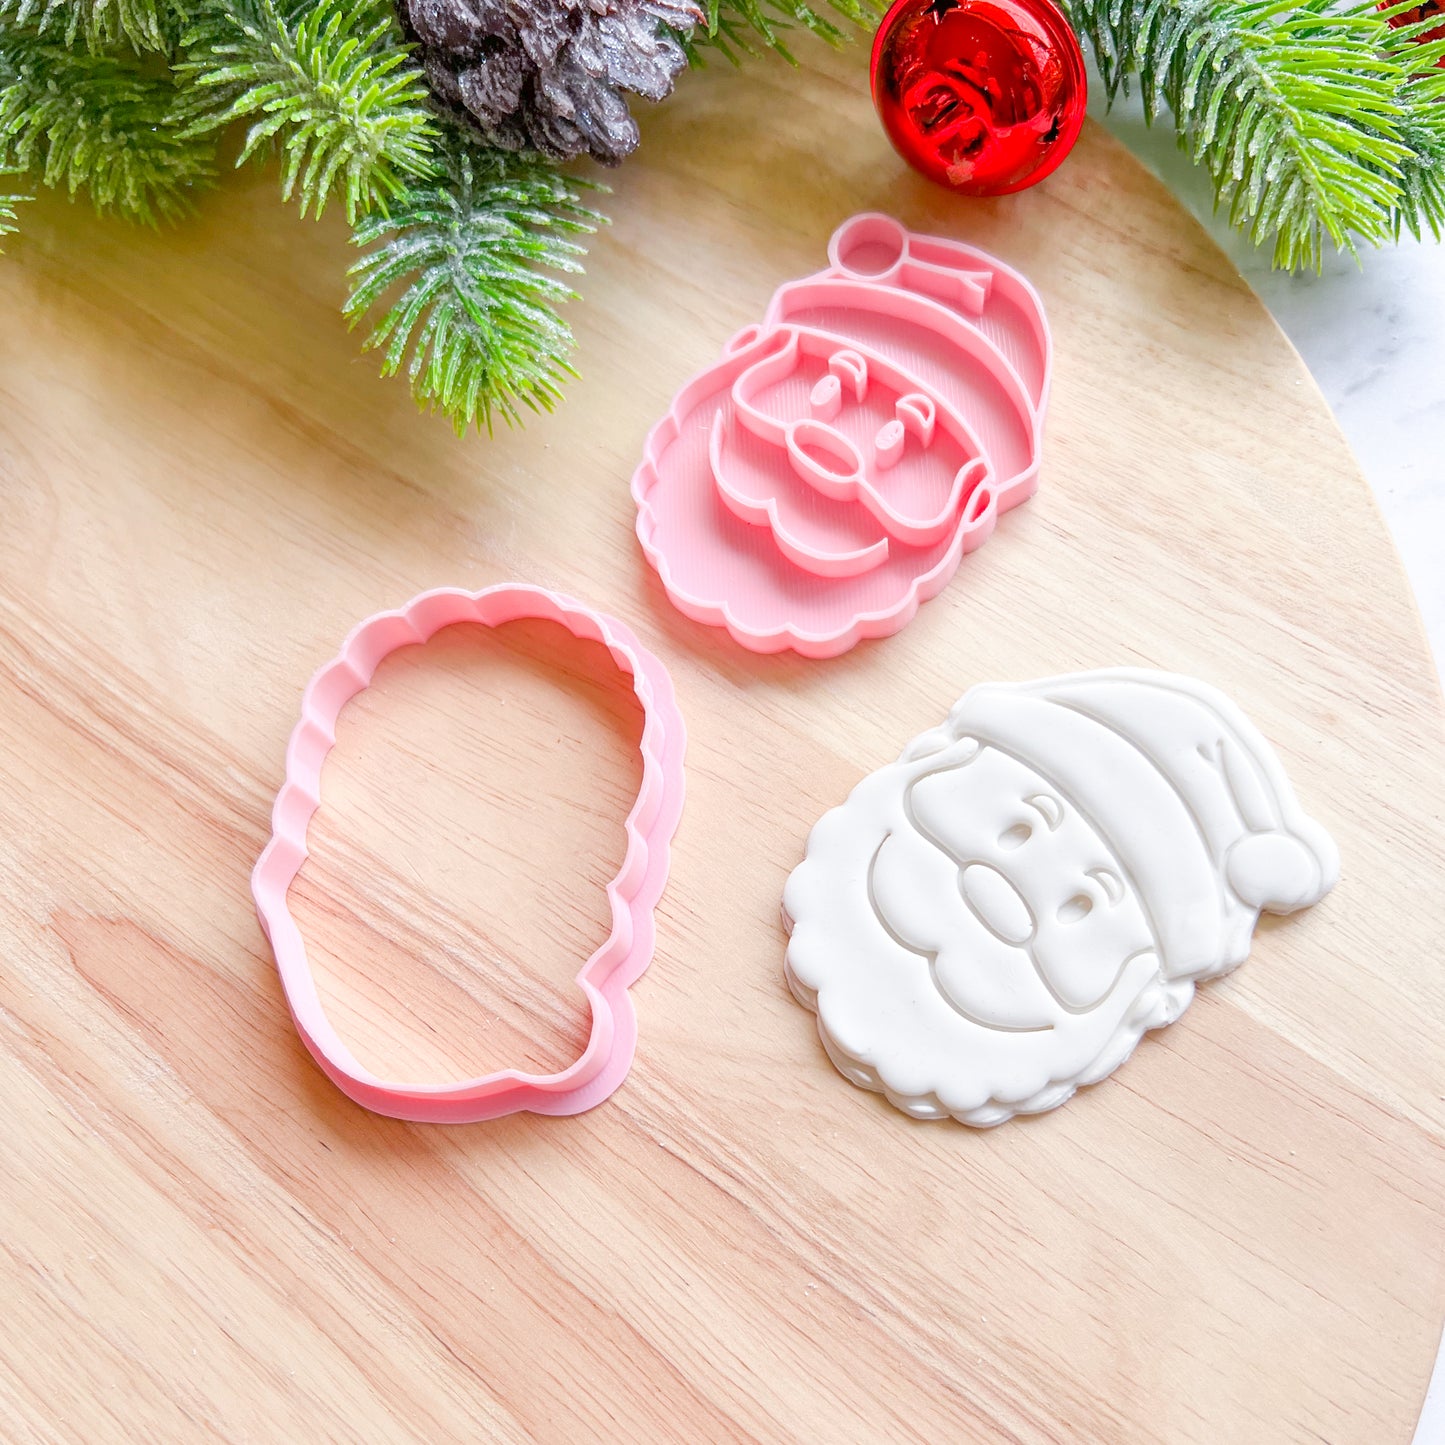 "Santa Smile" Cookie Cutter & Stamp